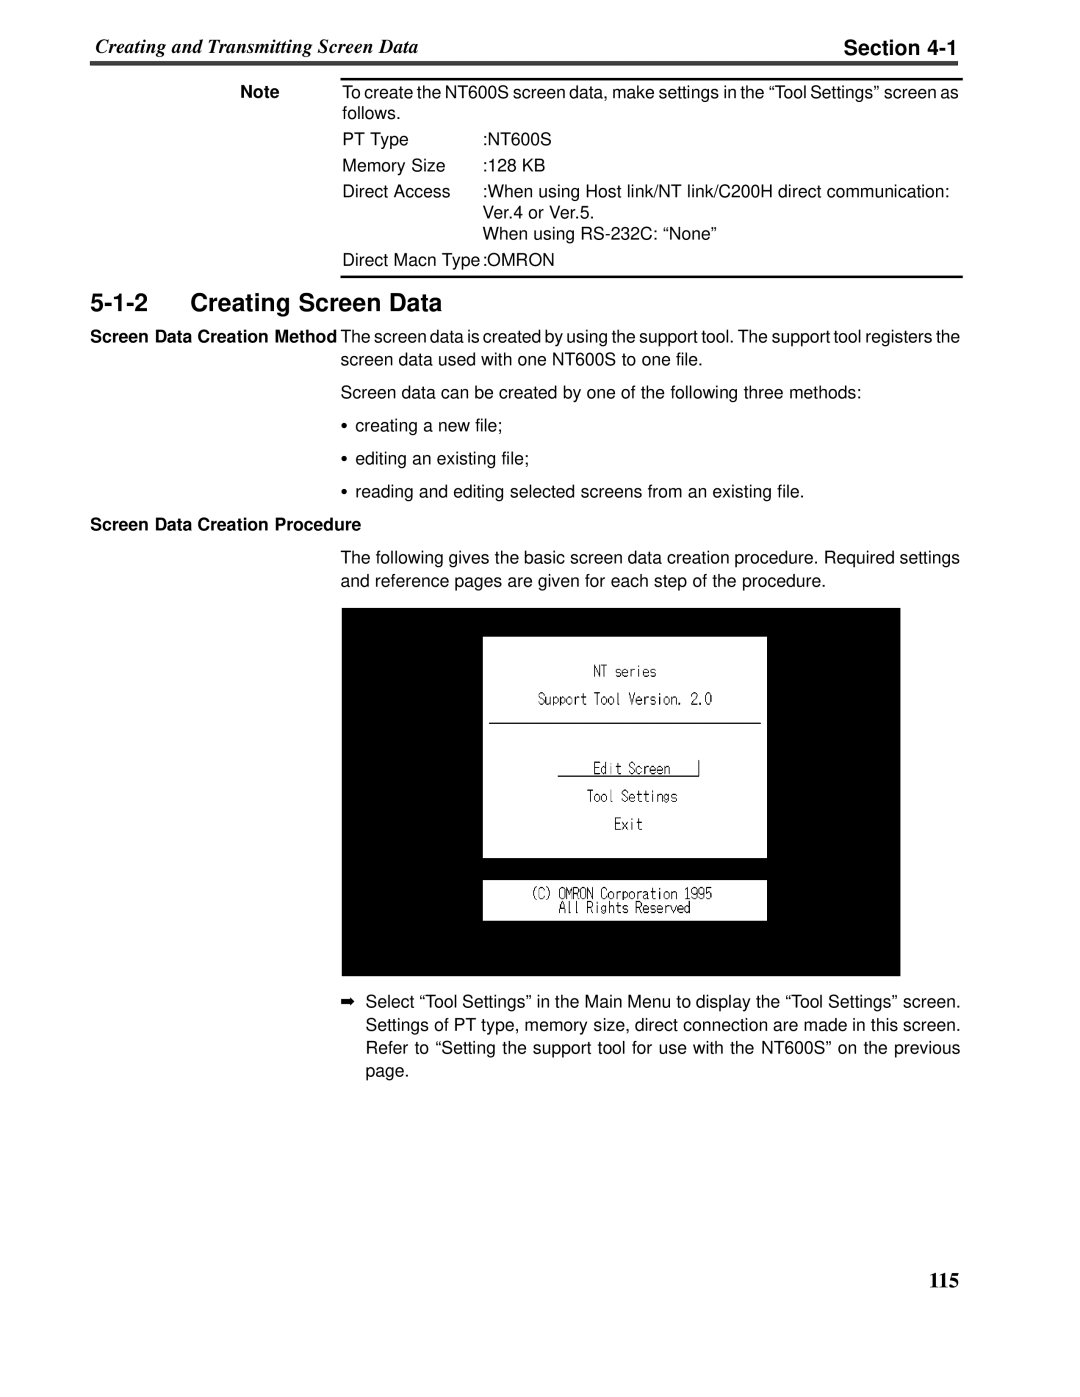 Omron V022-E3-1 operation manual 5-1-2Creating Screen Data, Section, Screen Data Creation Procedure 